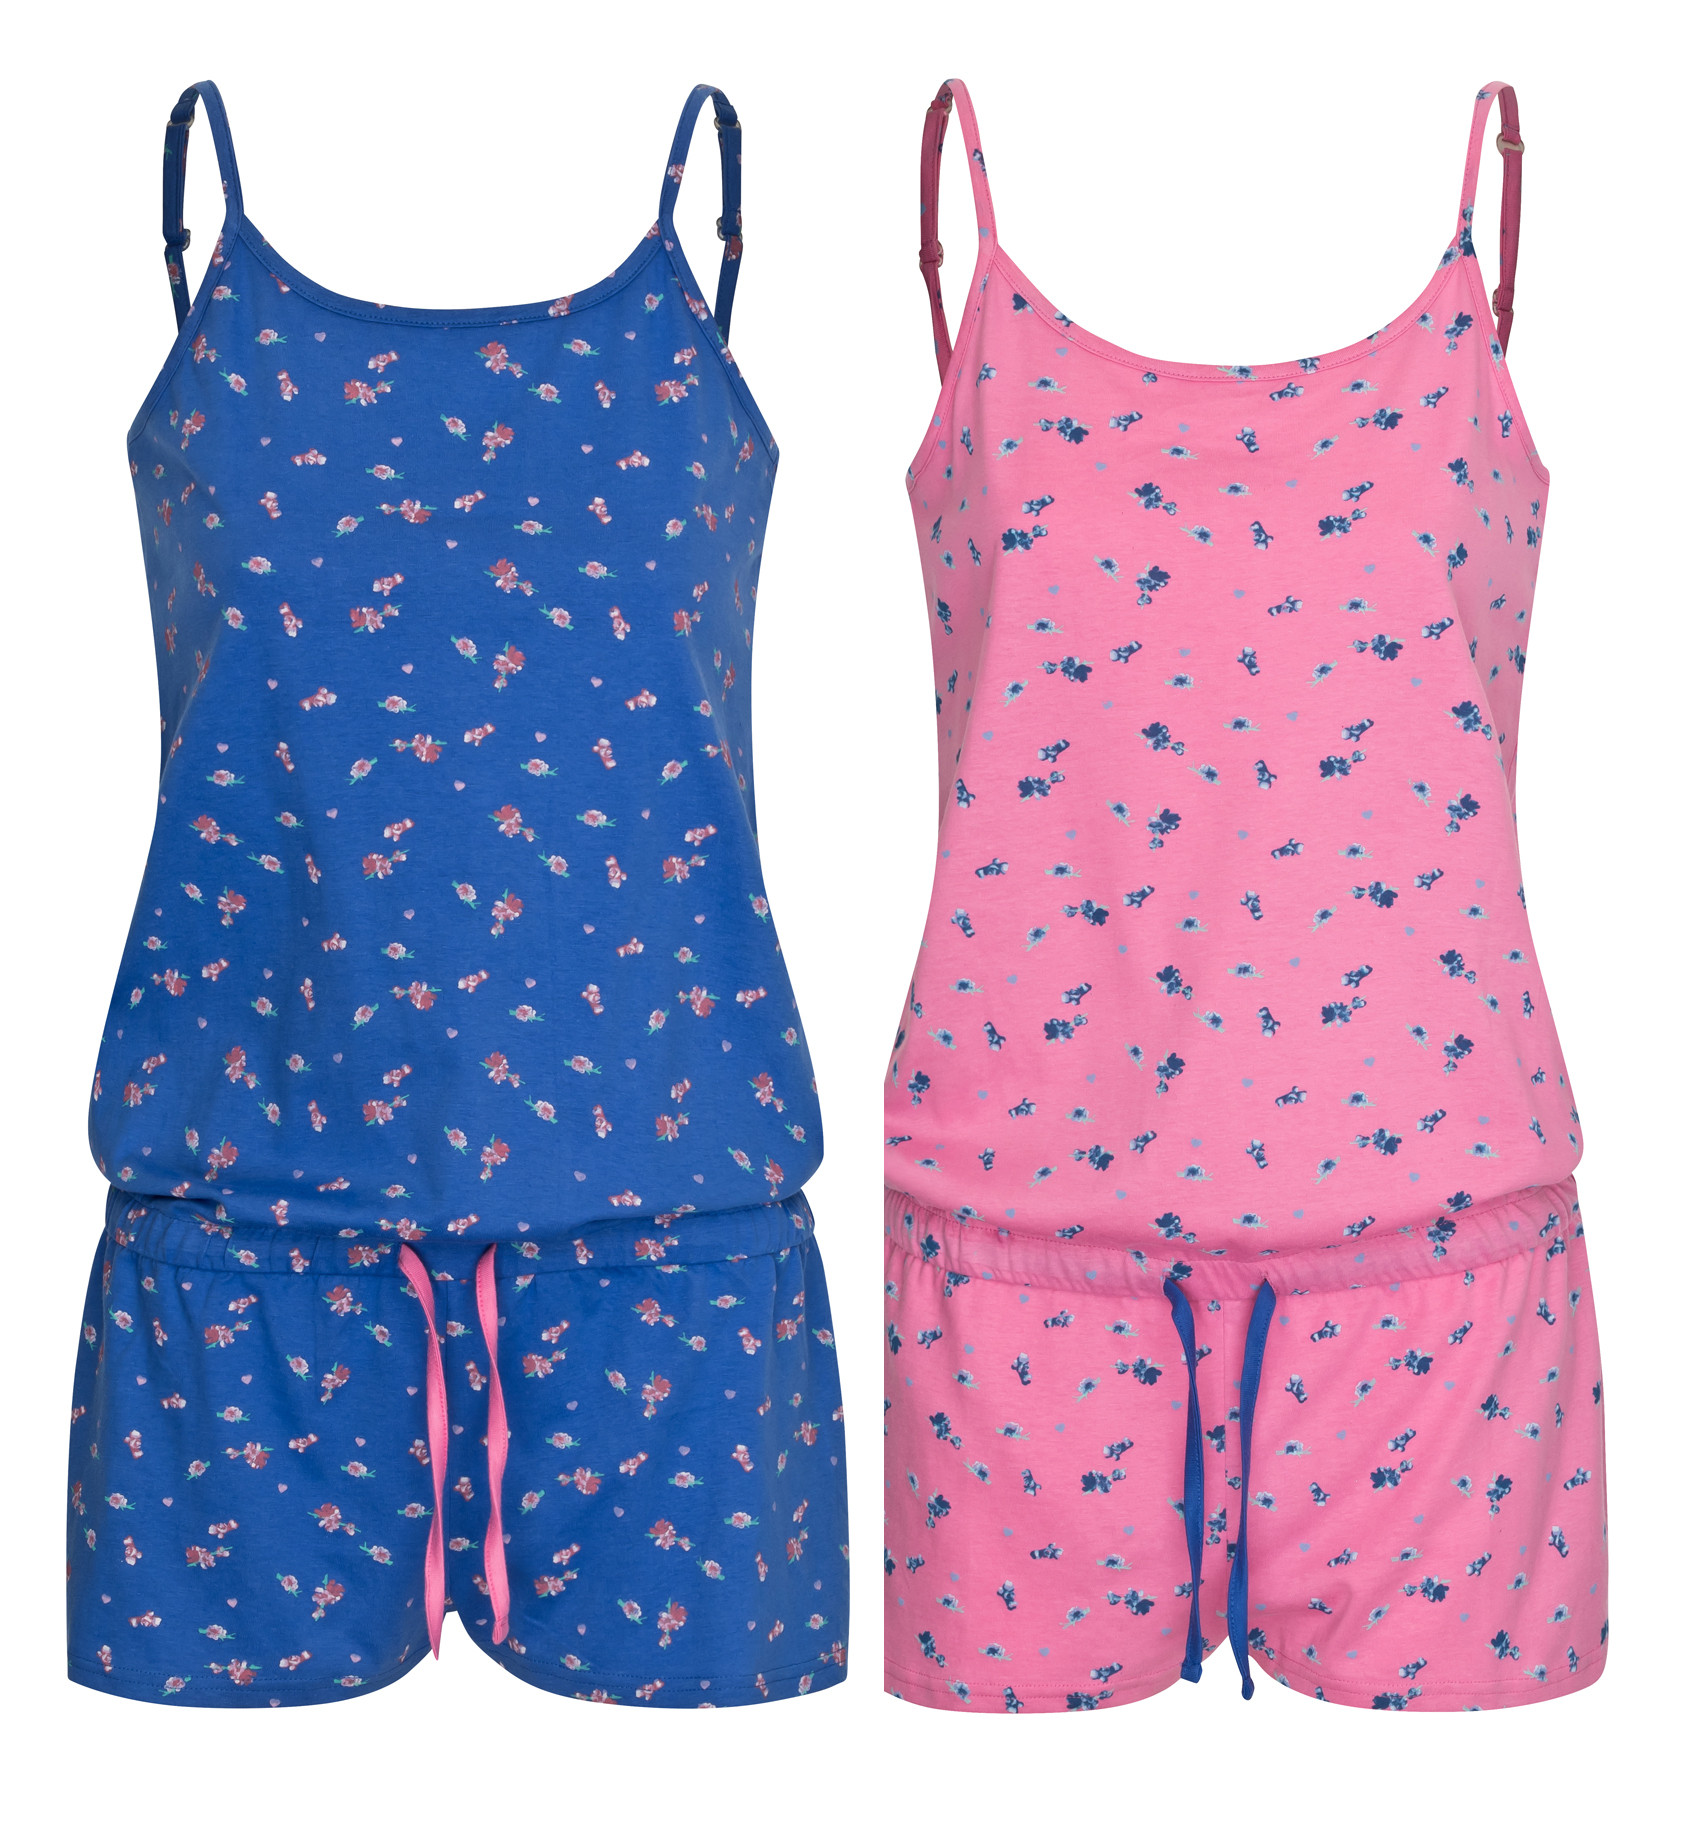 Moonline Damen kurzer Schlafanzug Jumpsuit Ones in pink blau Gr. S 36 38 